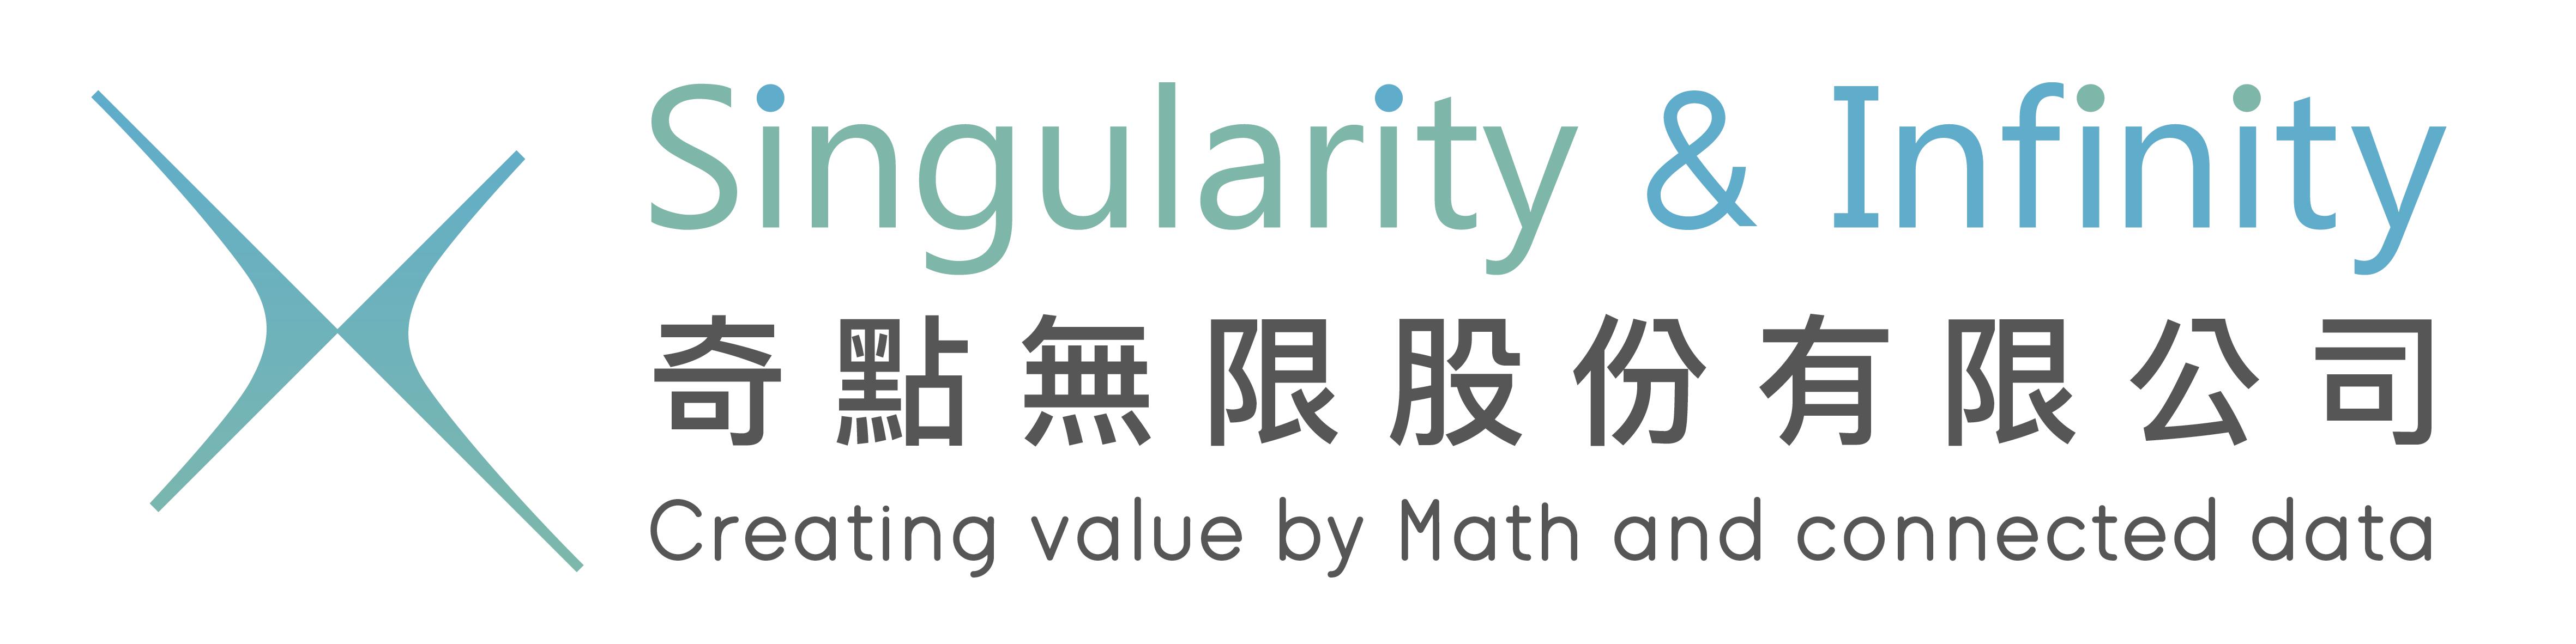 Singularity & Infinity_logo